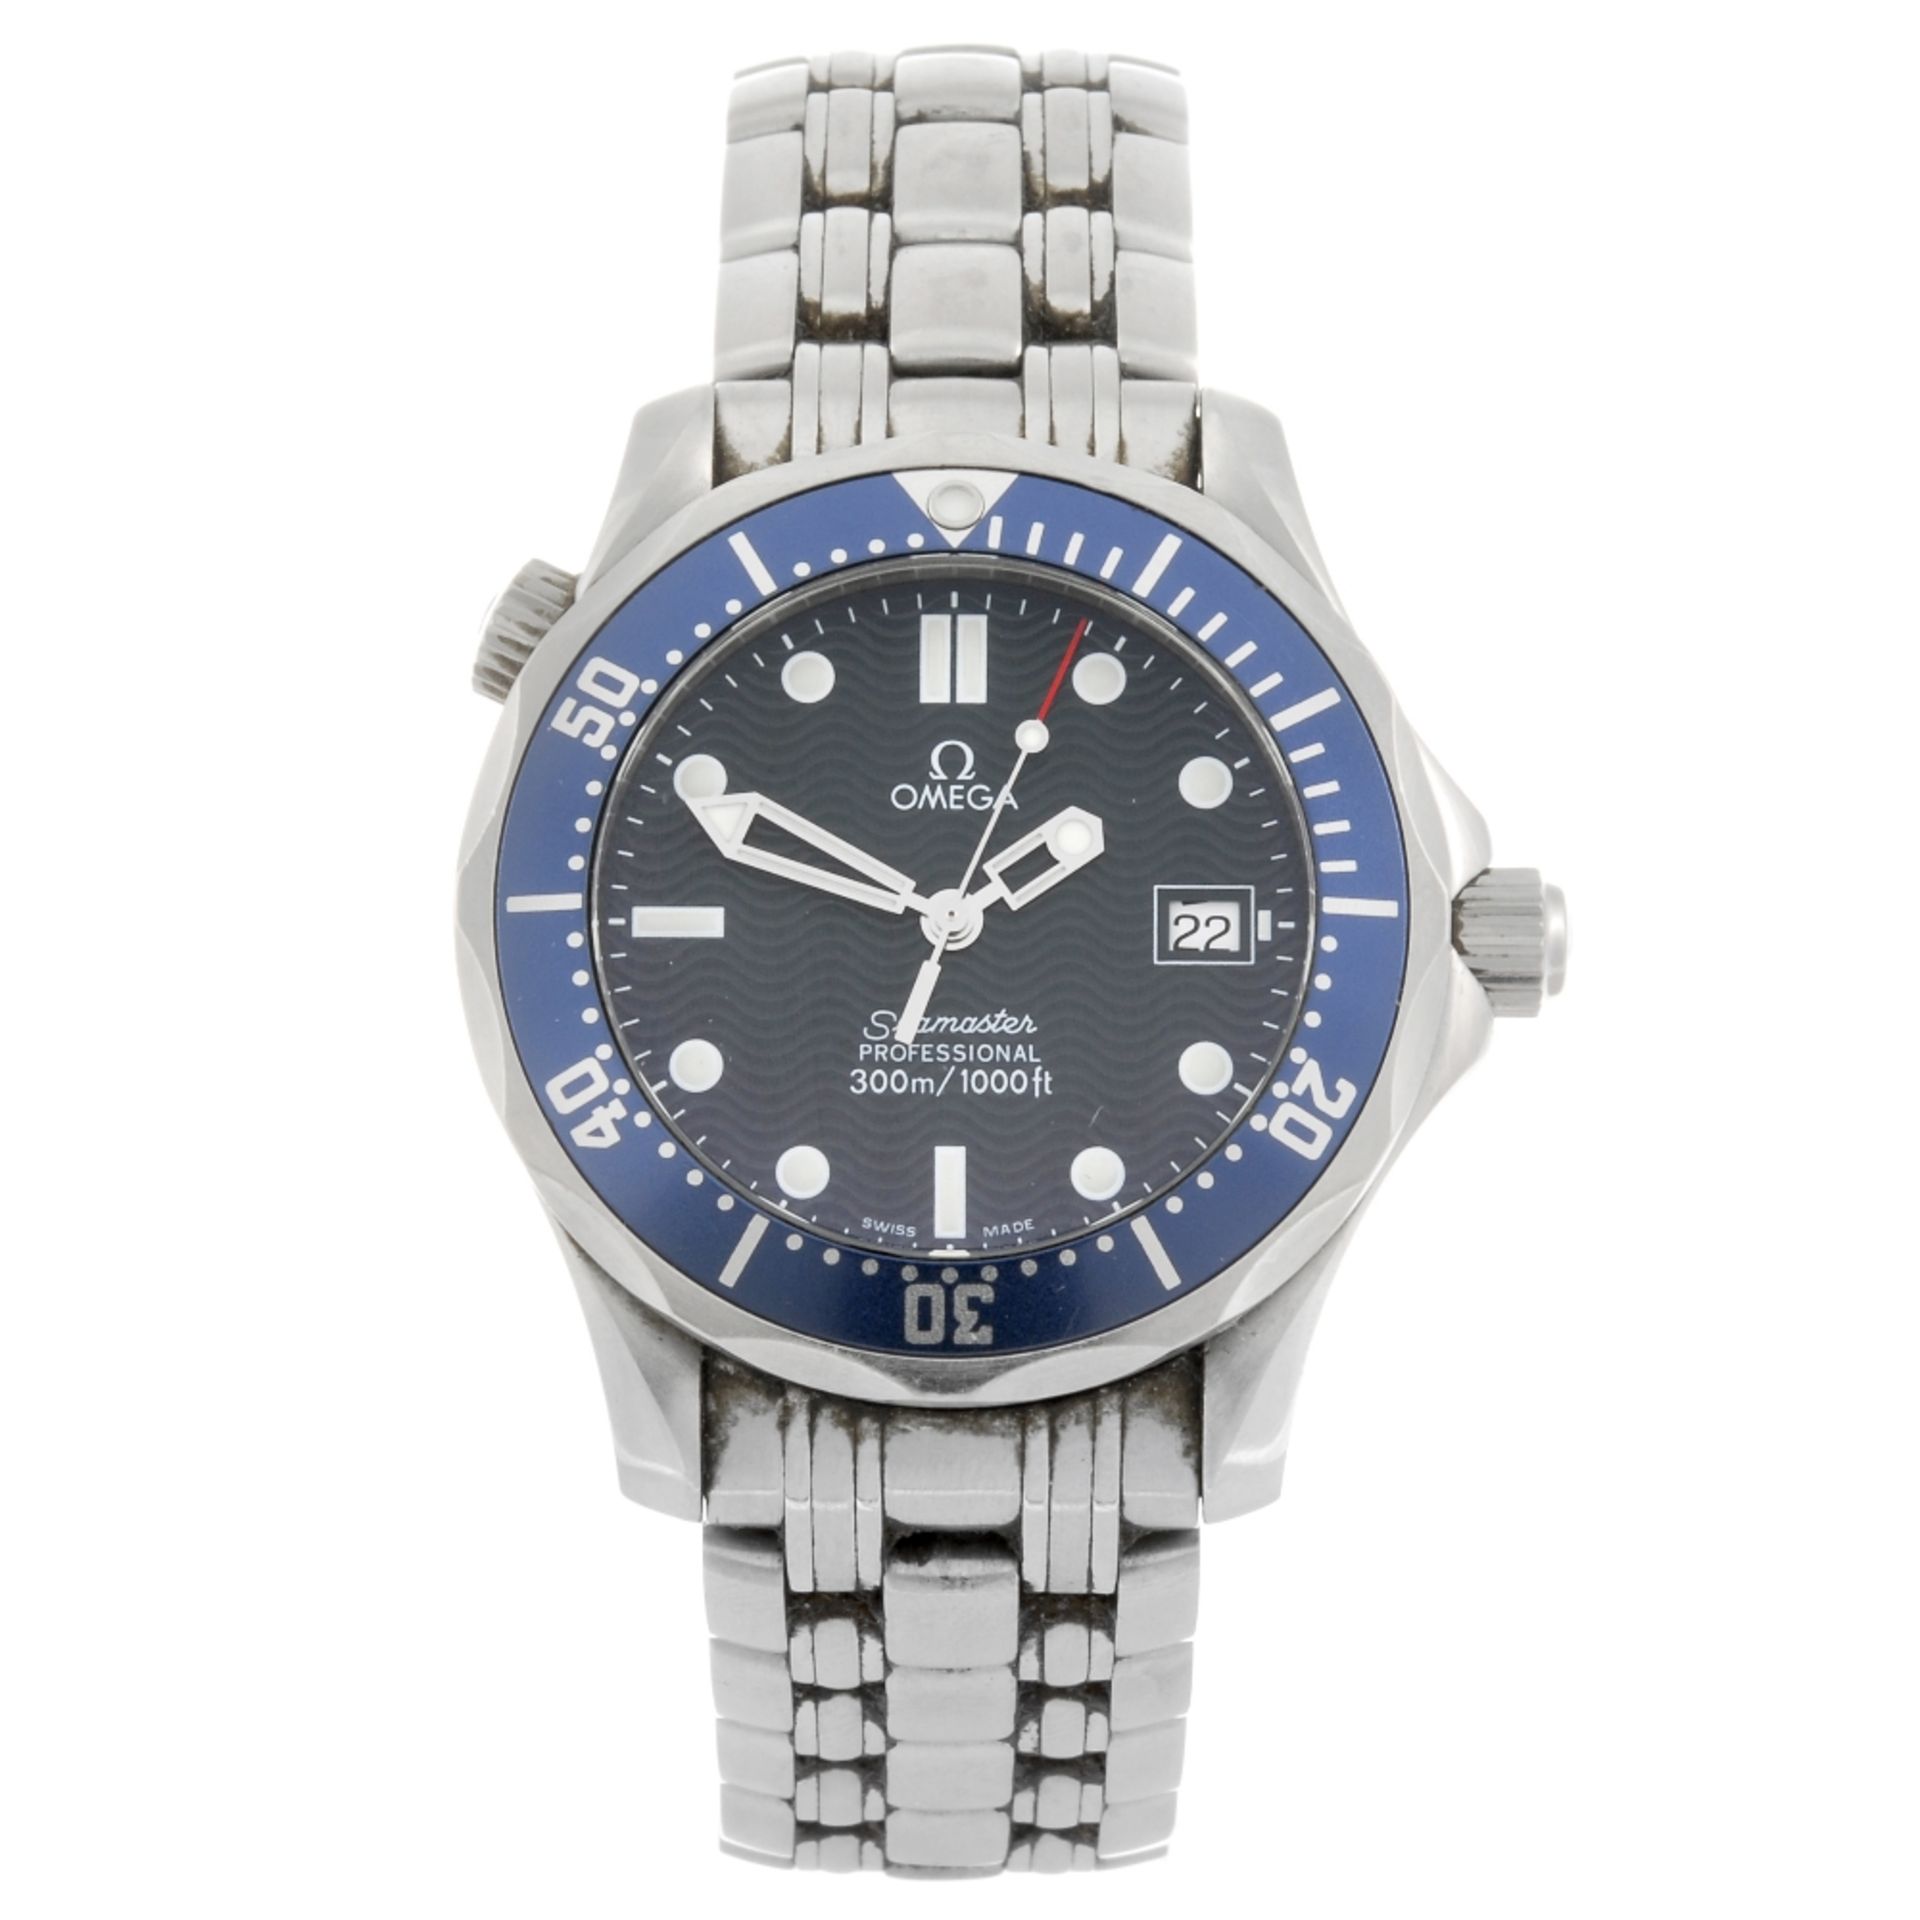 OMEGA - a mid-size Seamaster Professional bracelet watch. Numbered 59205710. Signed quartz calibre